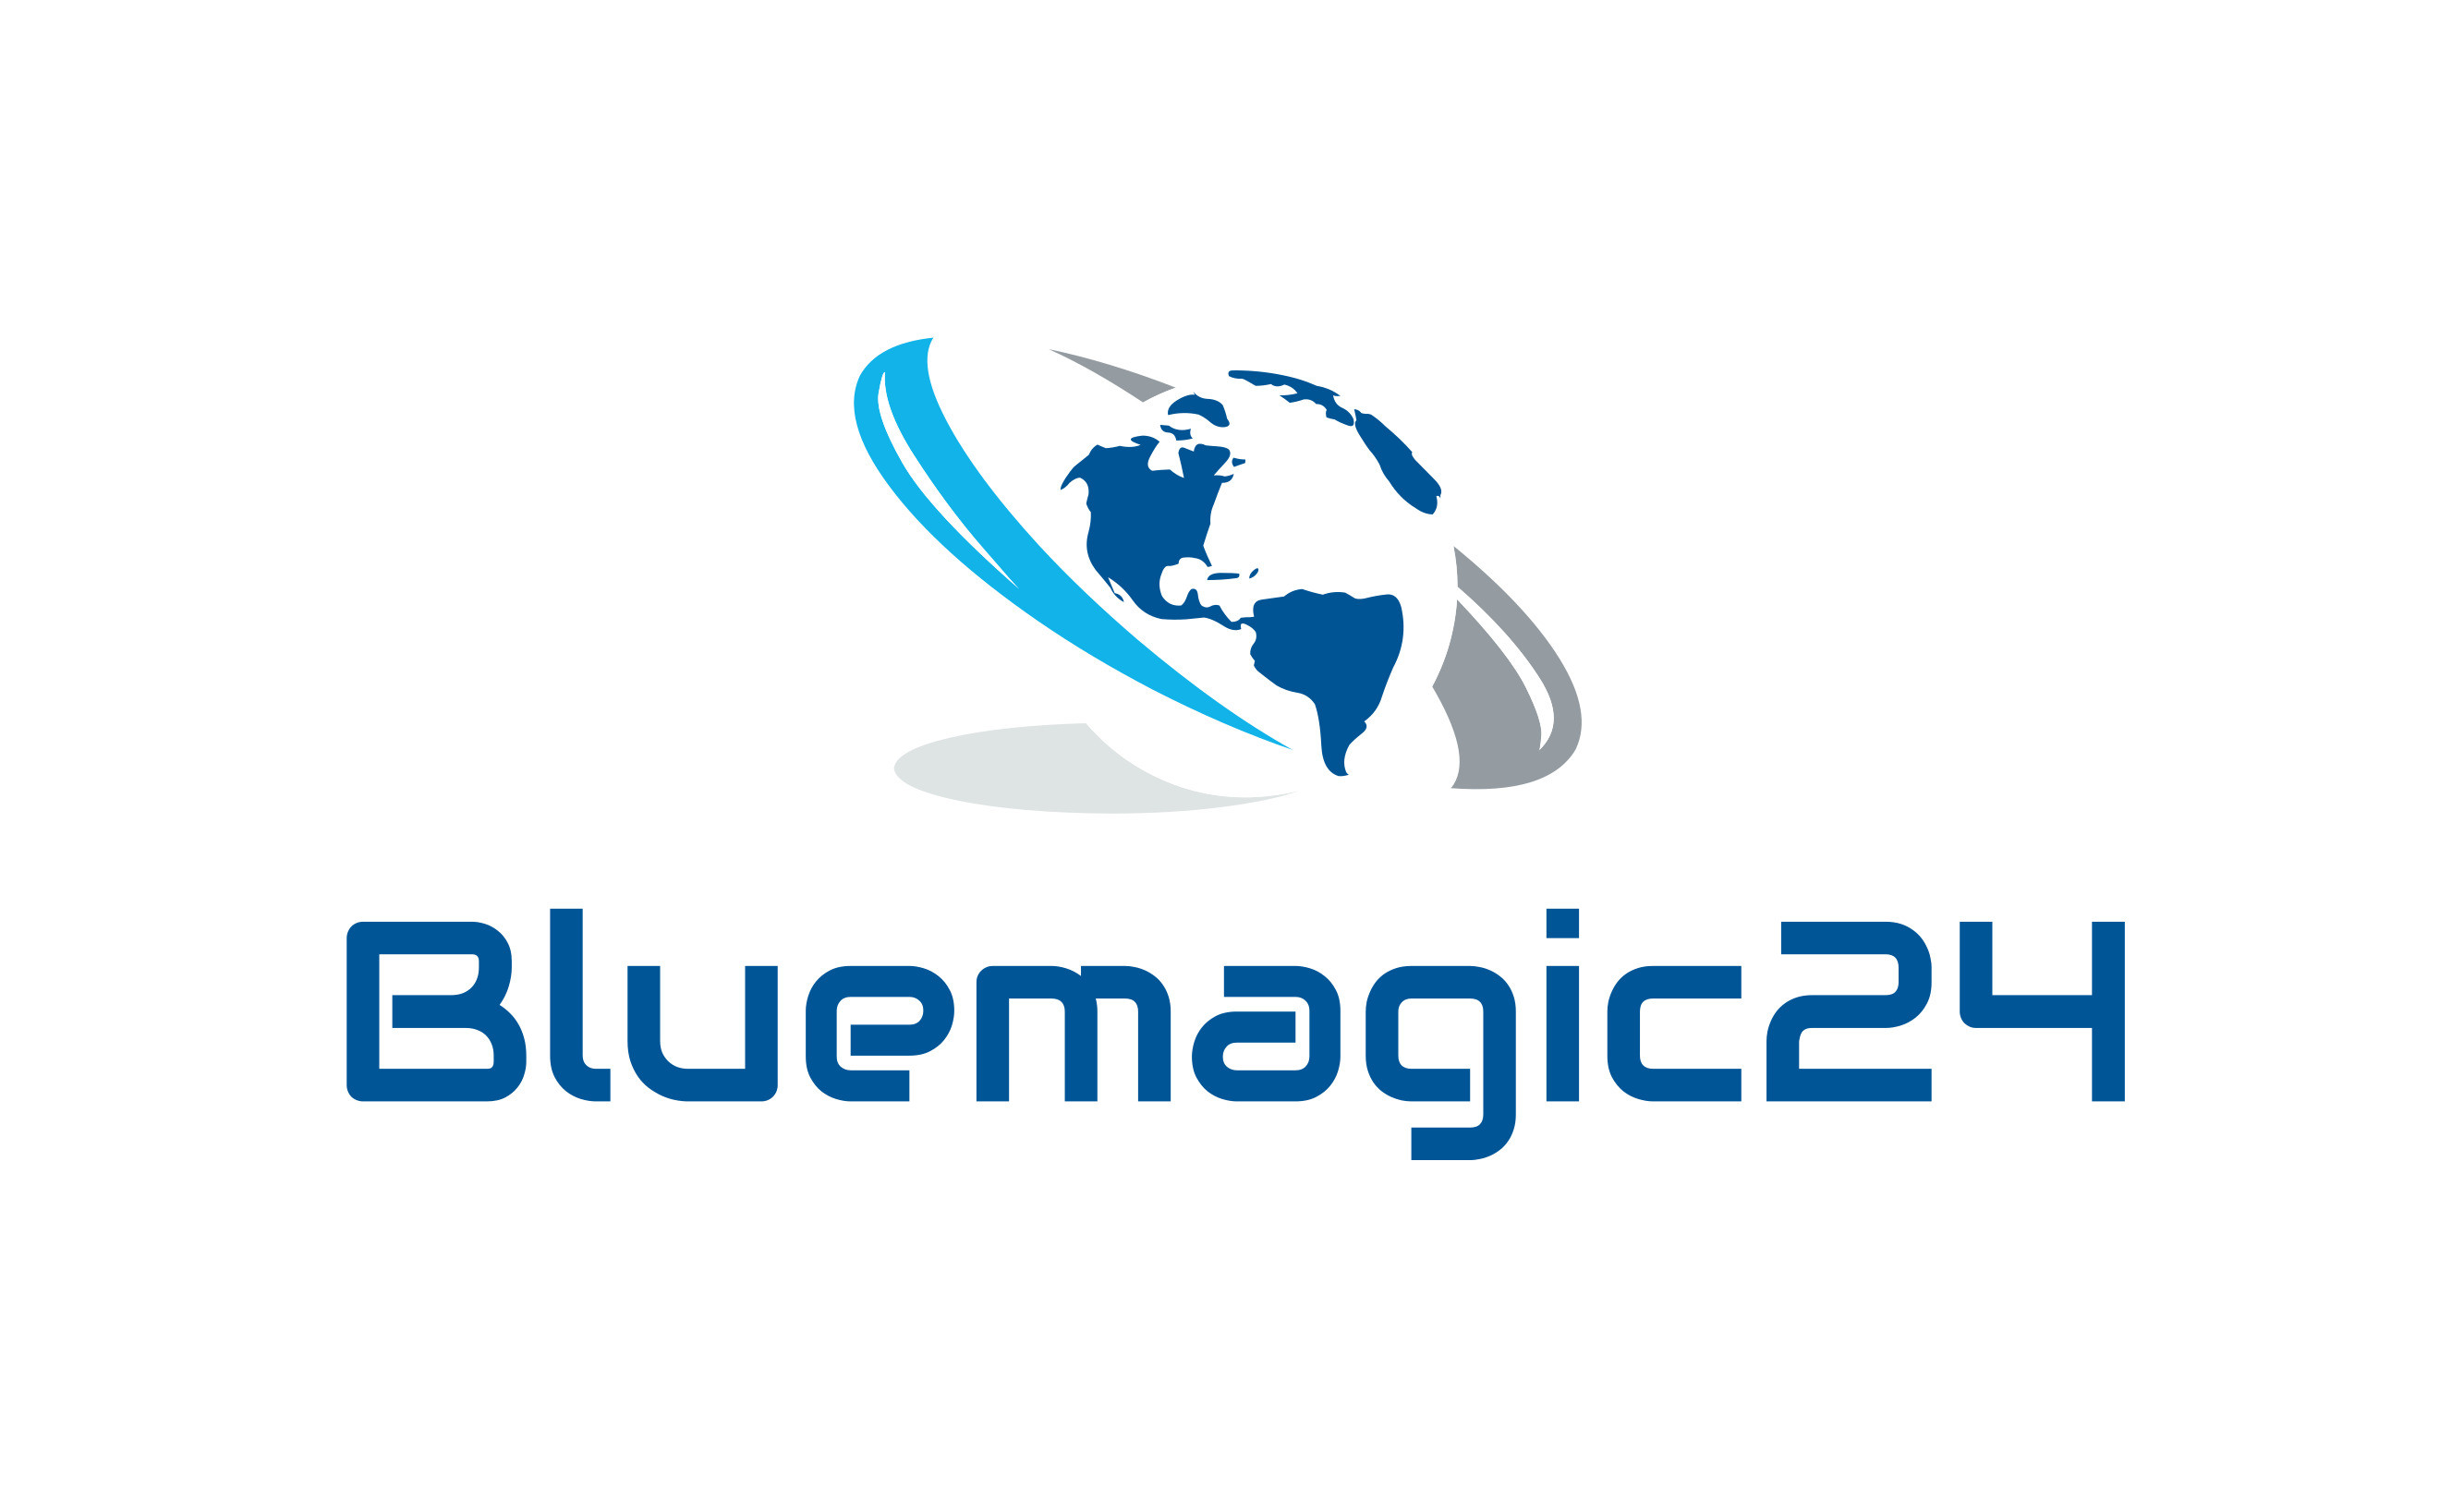 Bluemagic24